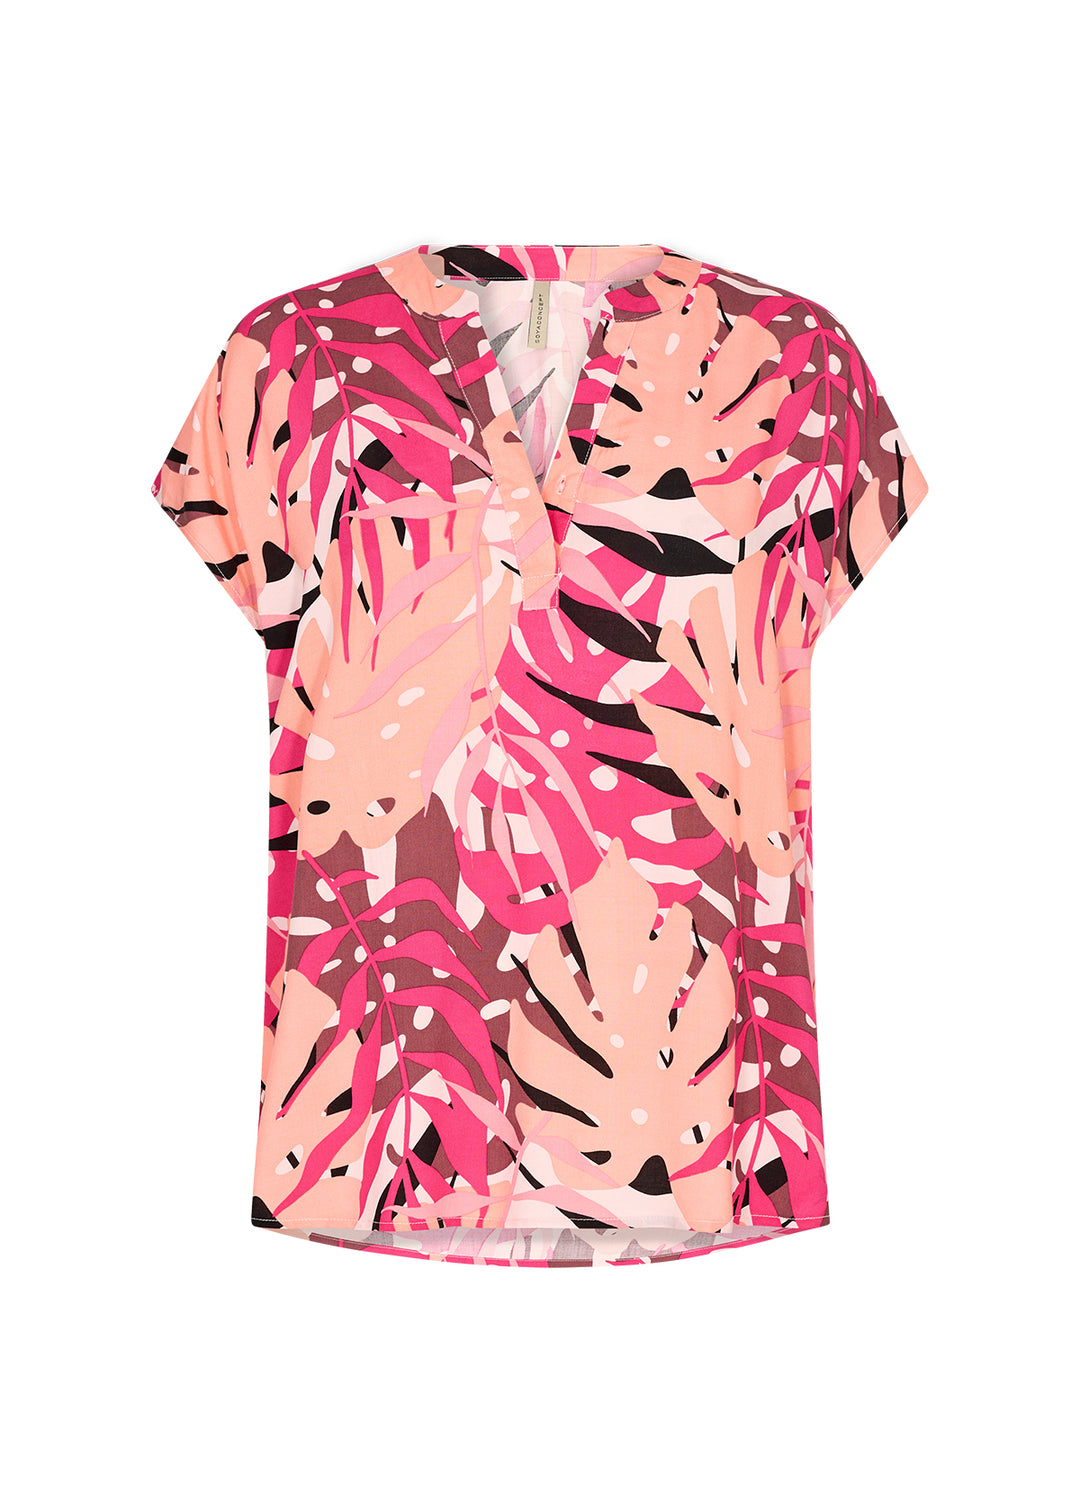 Soya Concept Kabrina 1 Pink Leaf Print Cap Sleeve Top Front View | Dotique